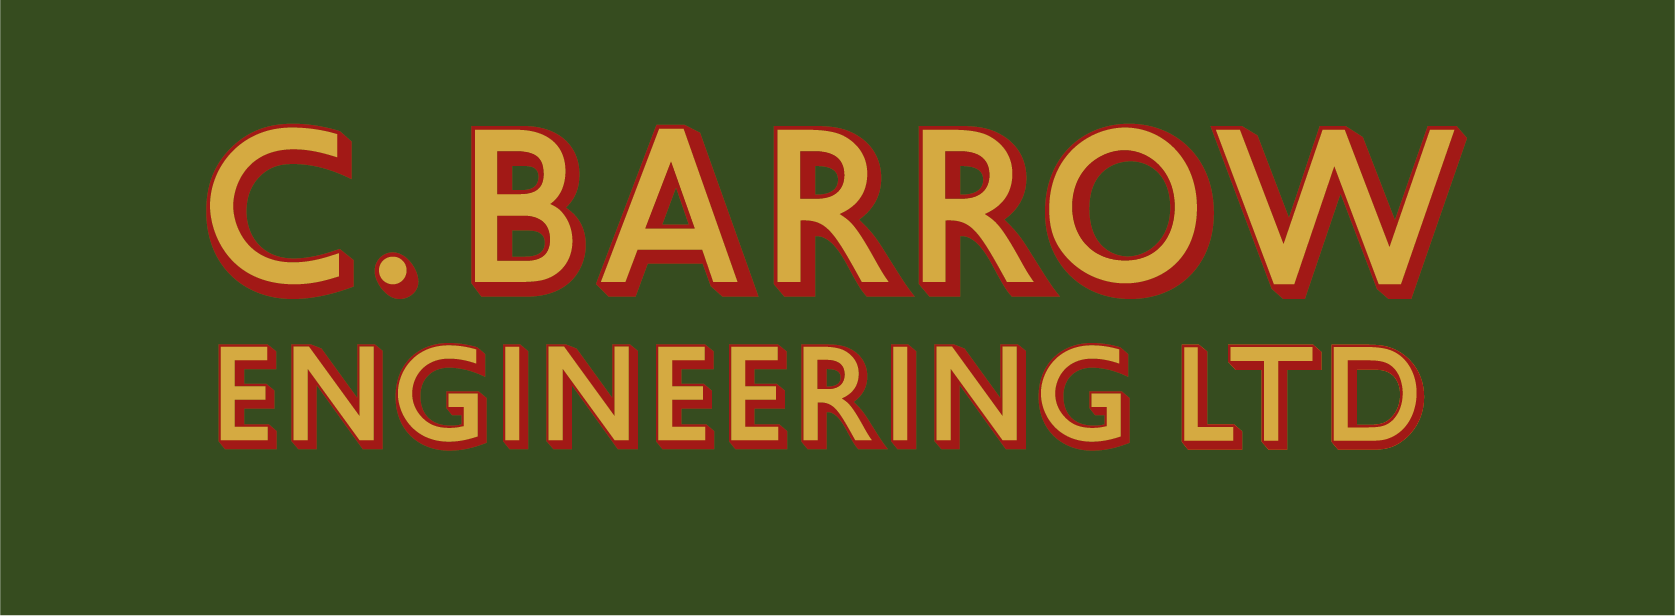 C Barrow Engineering Ltd - Custom engineering